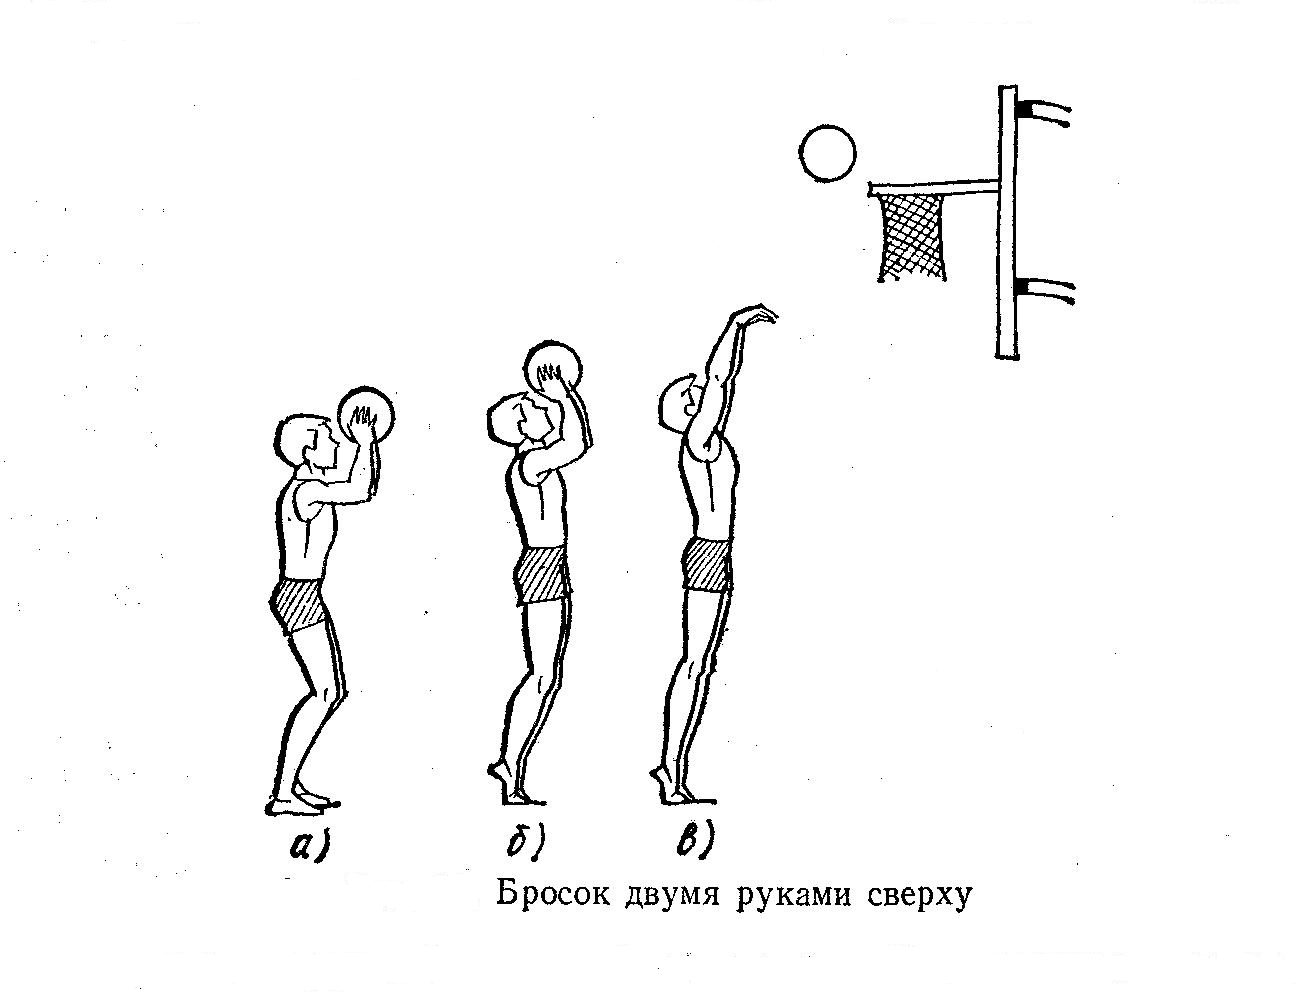 Бросок мяча снизу. Бросок мяча методом снизу. Бросок мяча в баскетболе снизу. Техника броска мяча двумя руками сверху в баскетболе. Бросок двумя руками сверху в баскетболе.